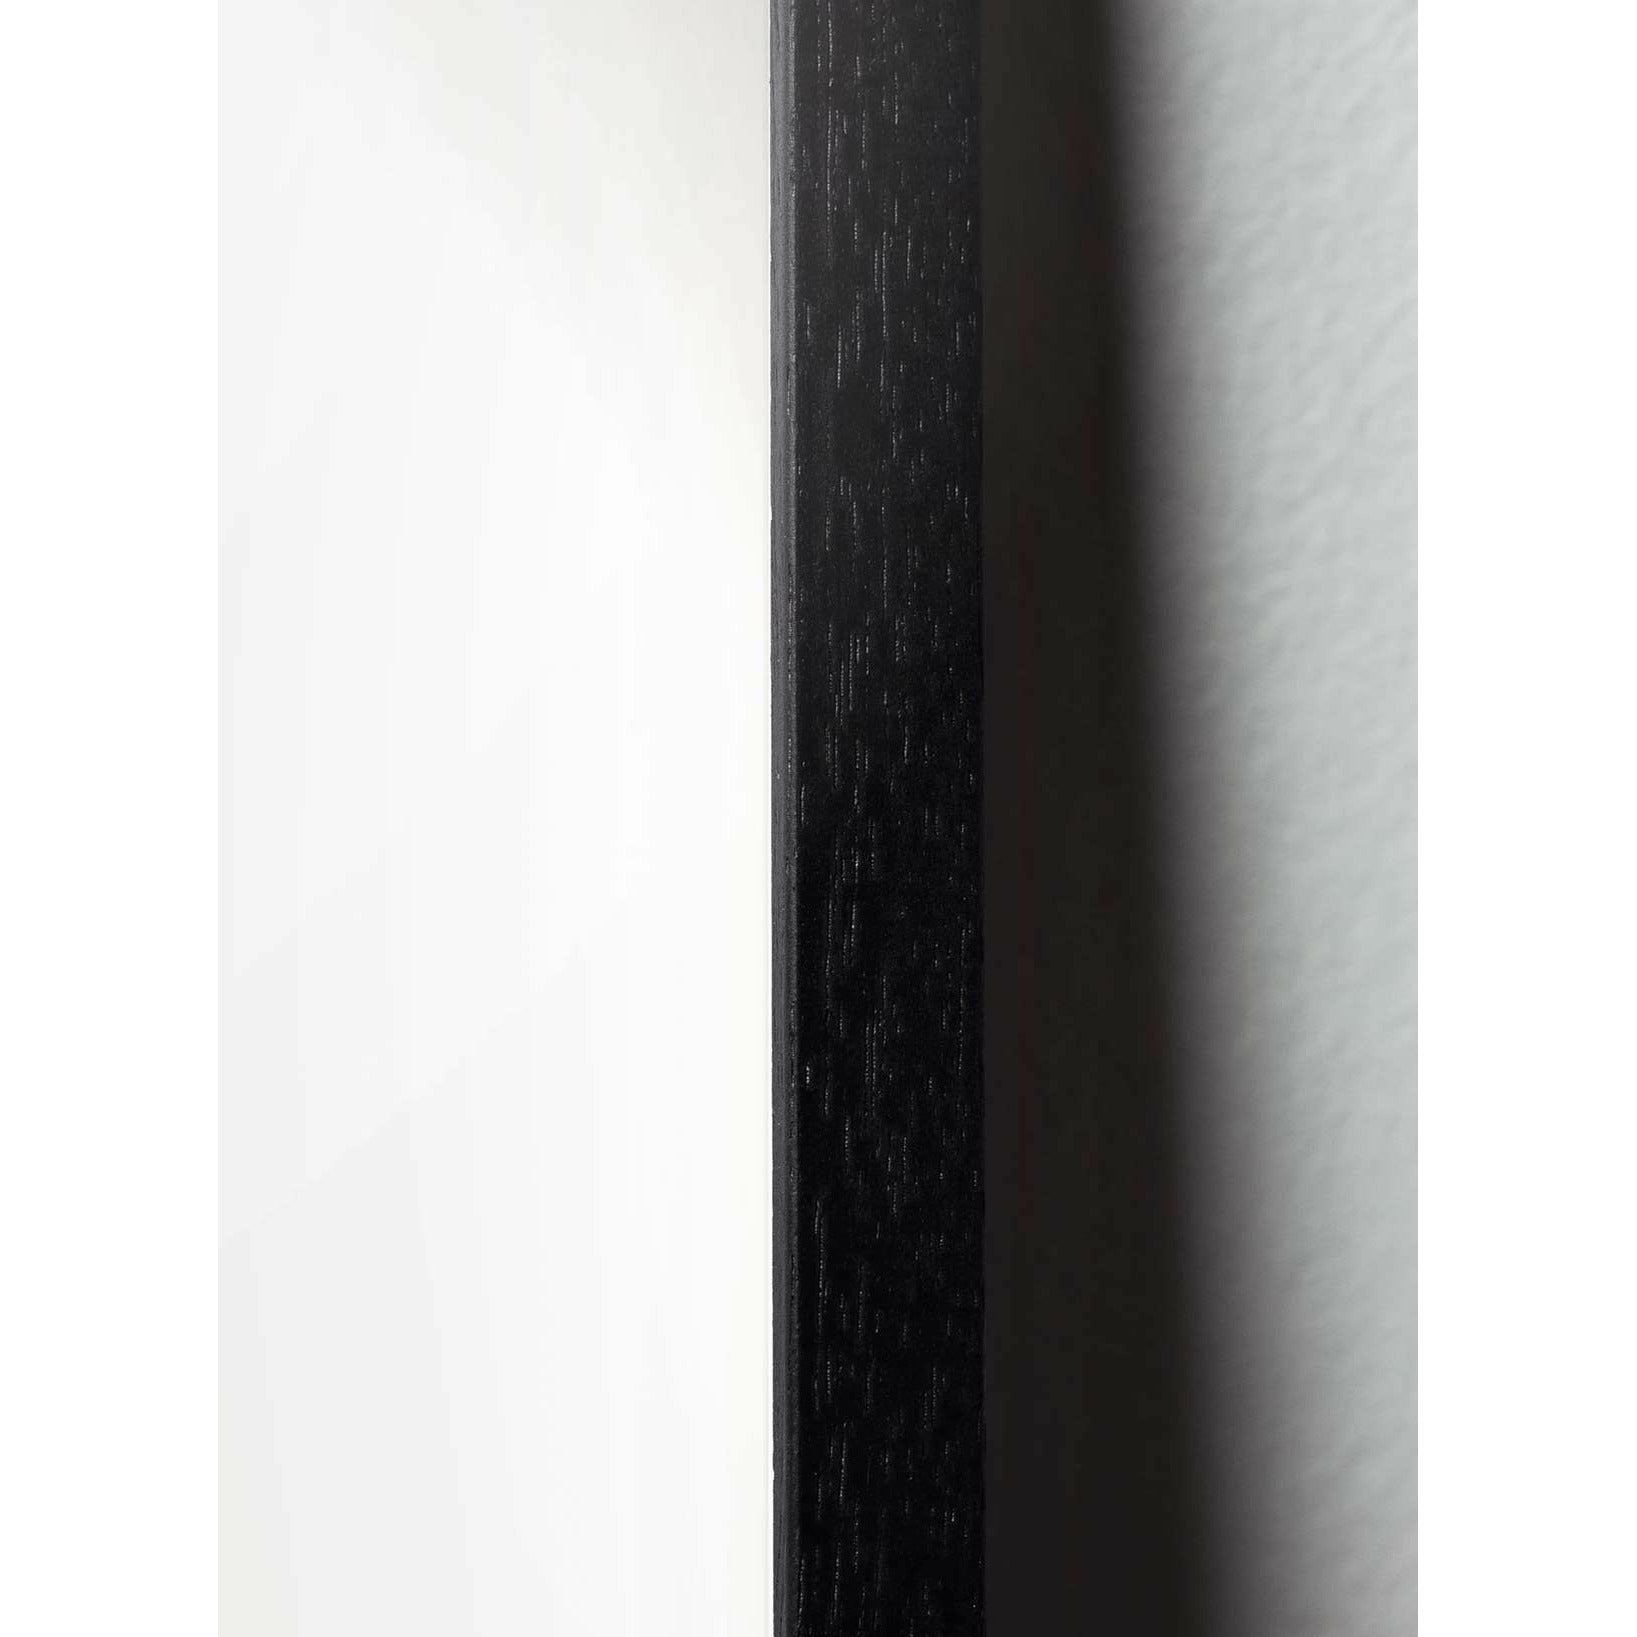 Póster de línea Swan de creación, marco en madera lacada negra de 70 x100 cm, fondo blanco